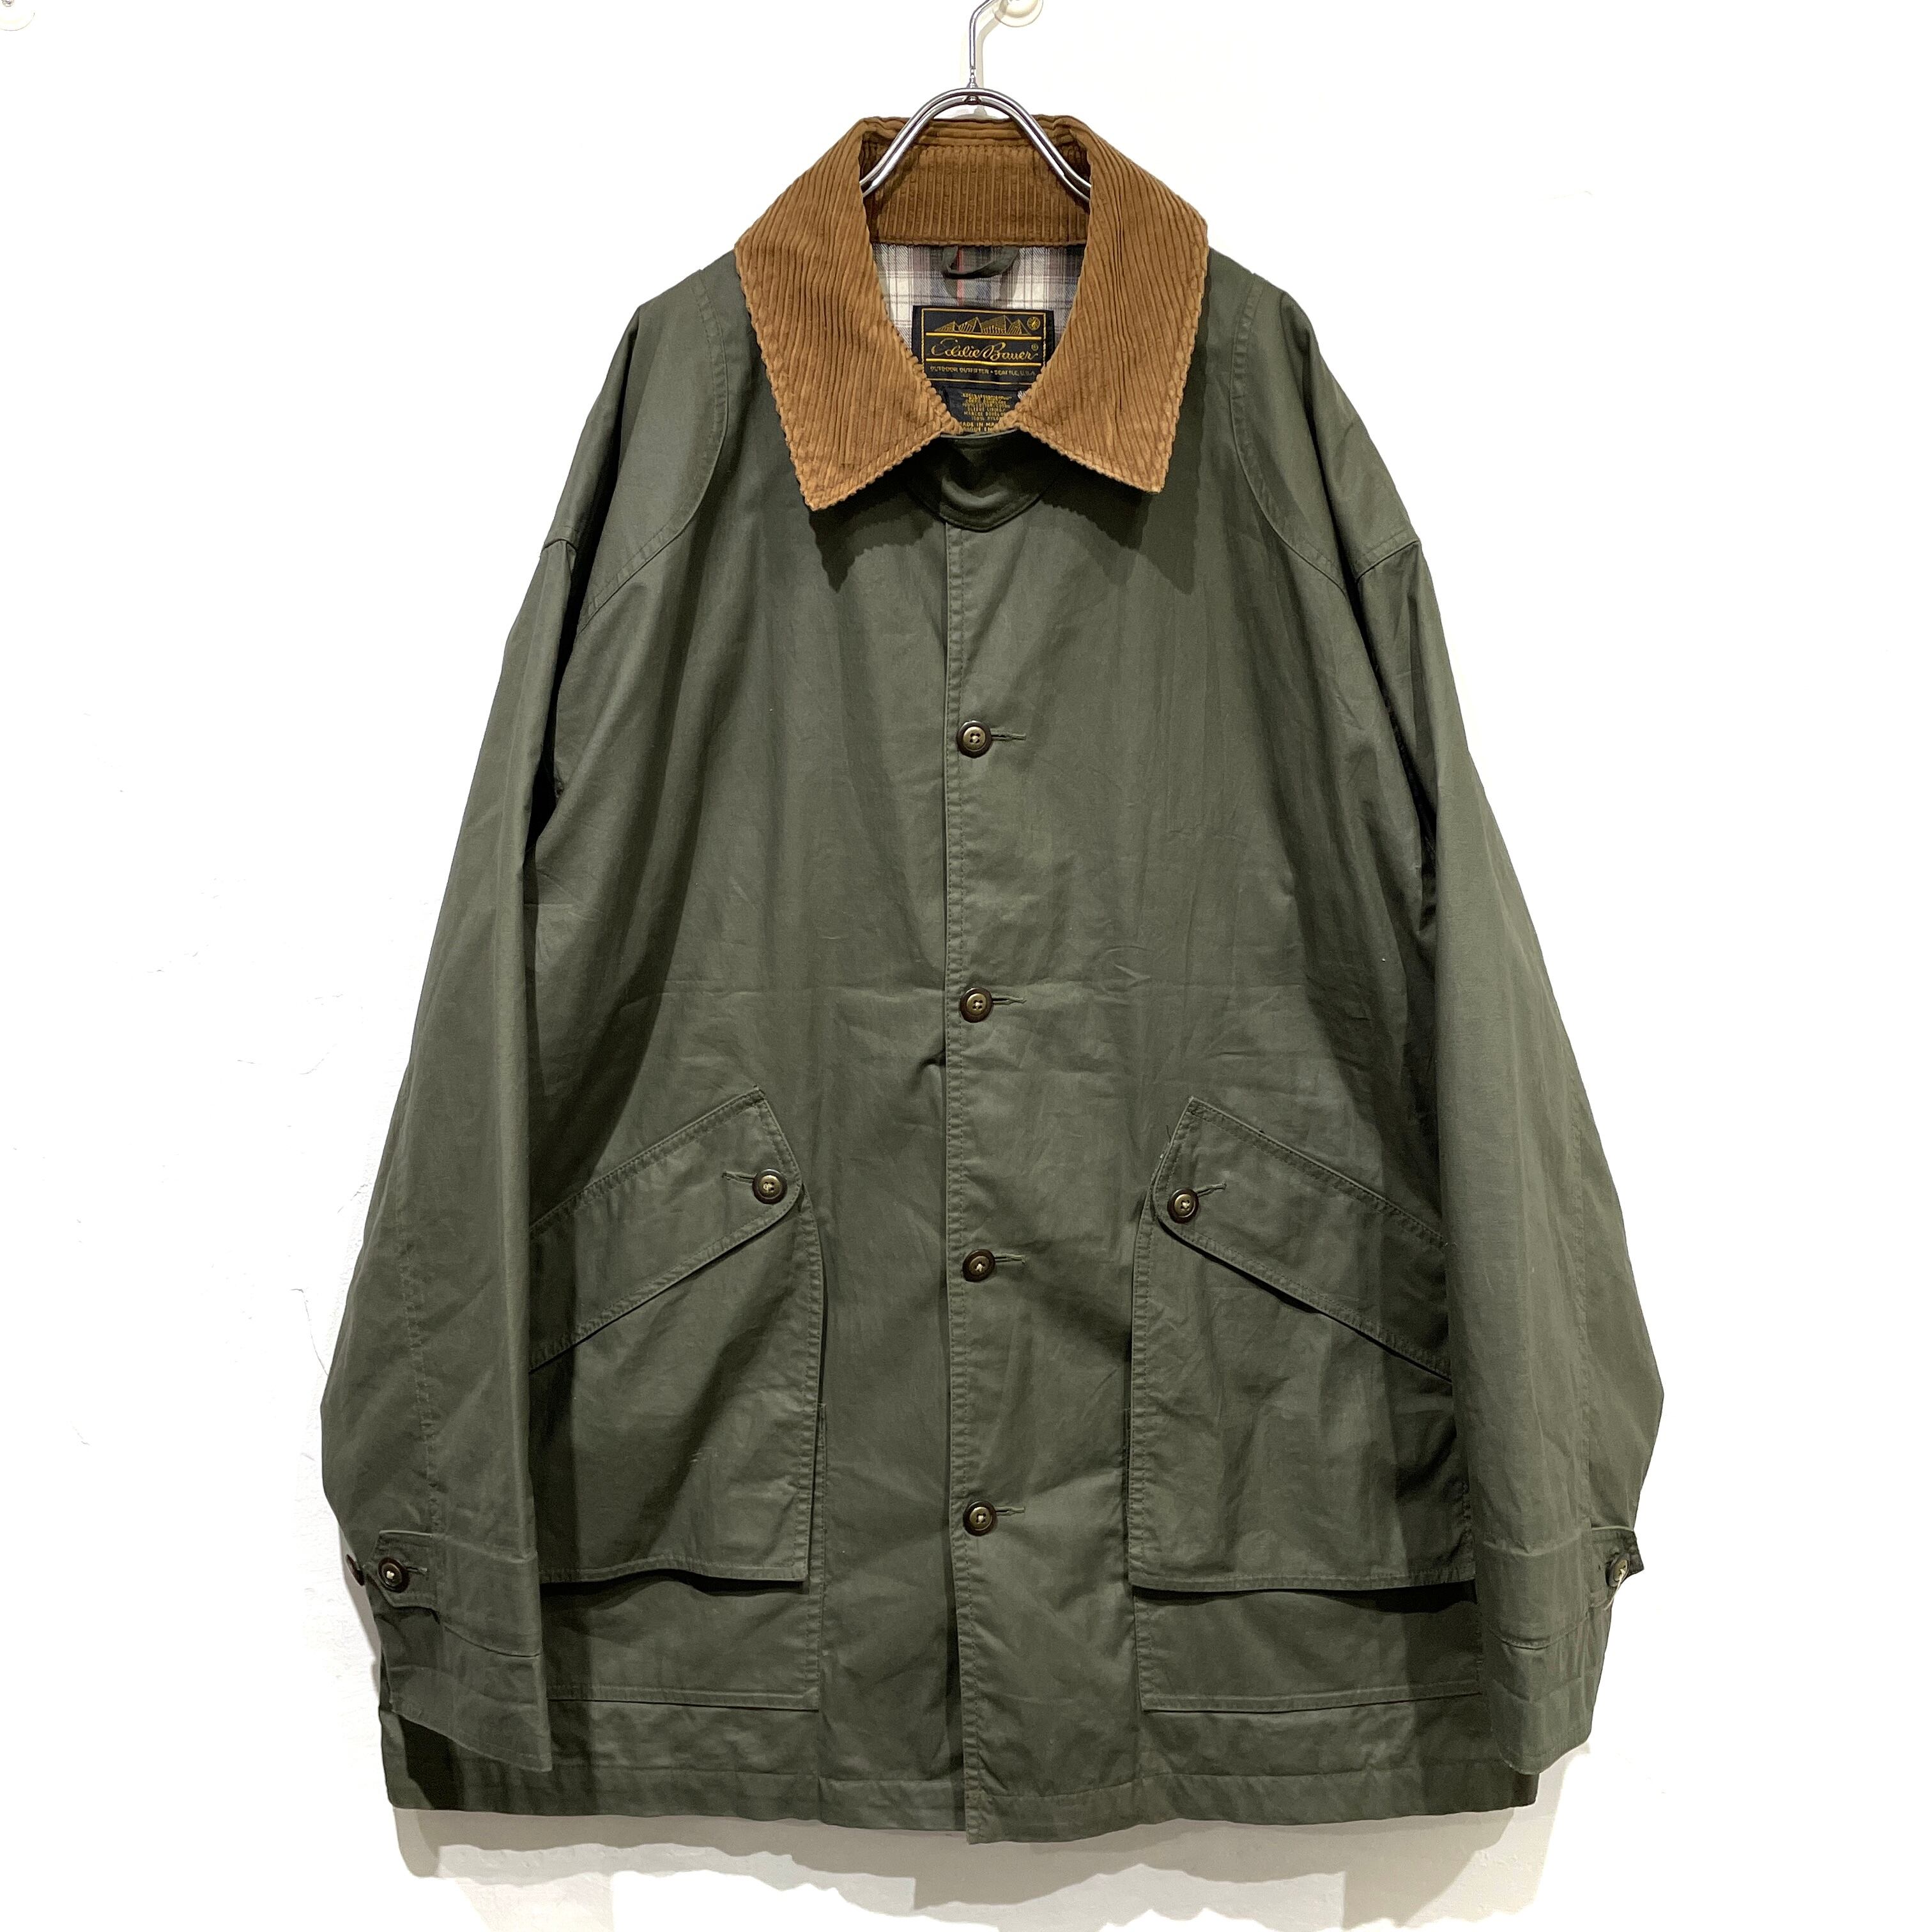 used hunting coat size:XL